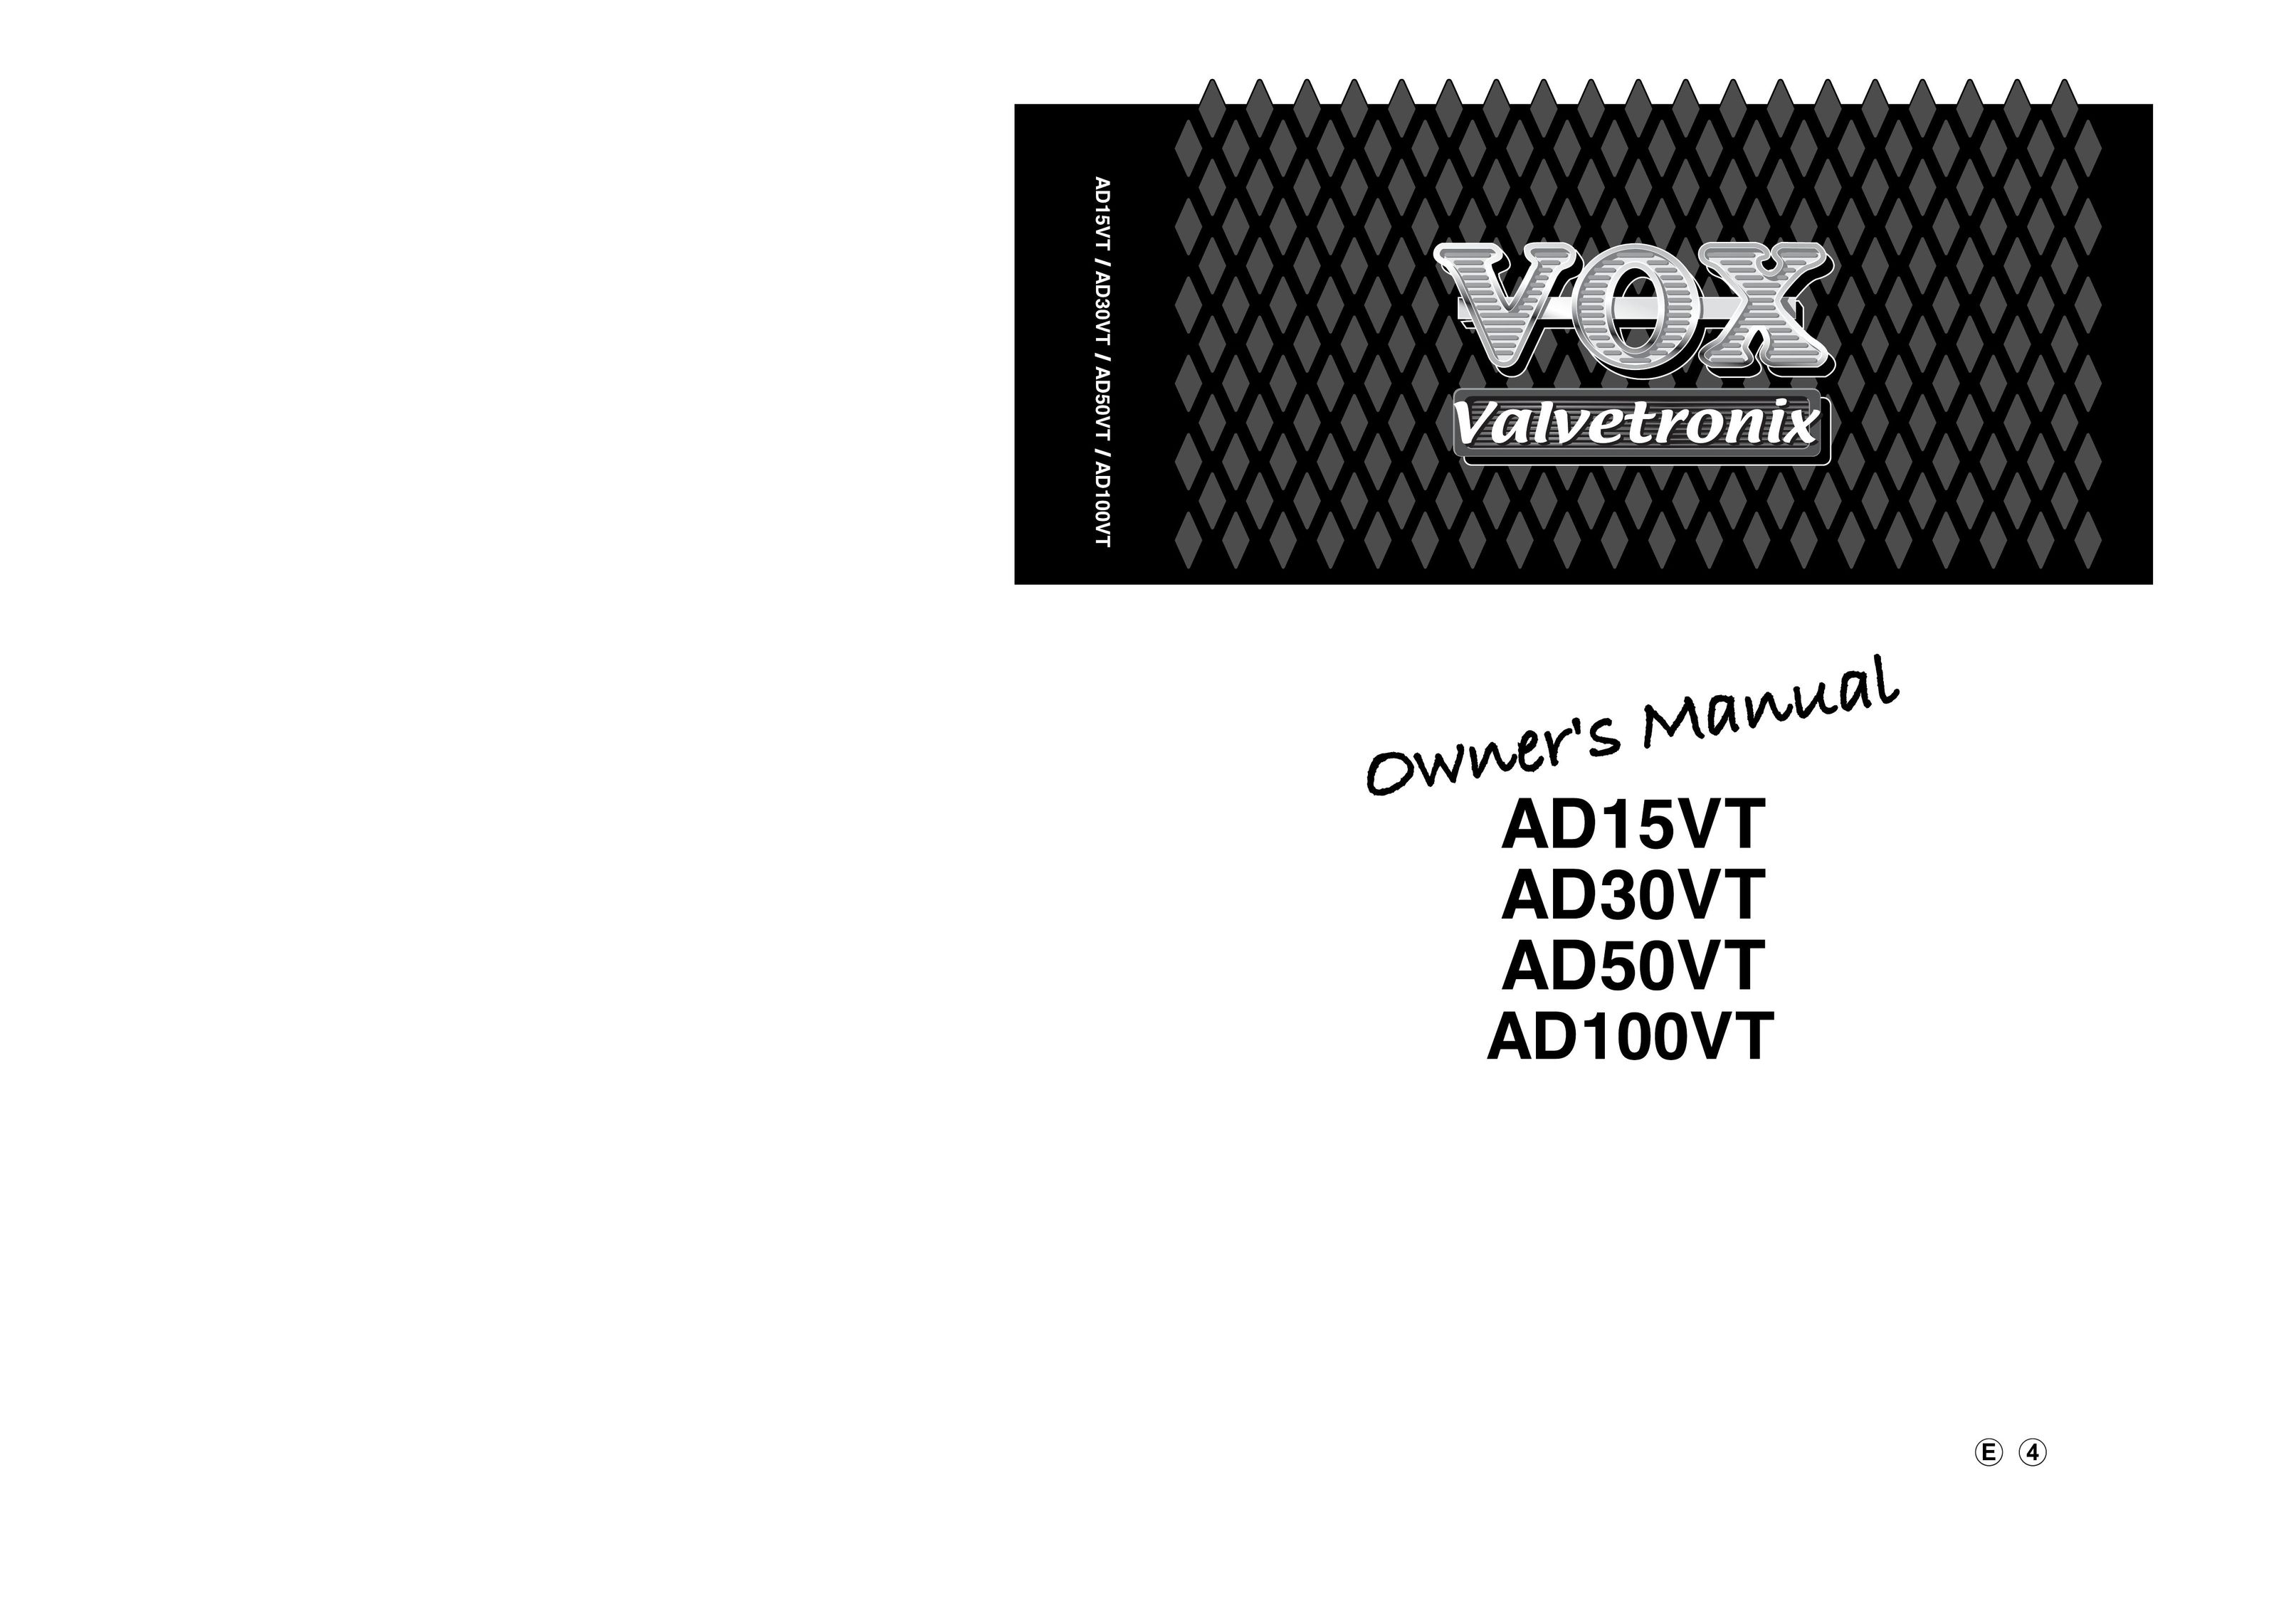 Vox AD50VT Computer Monitor User Manual